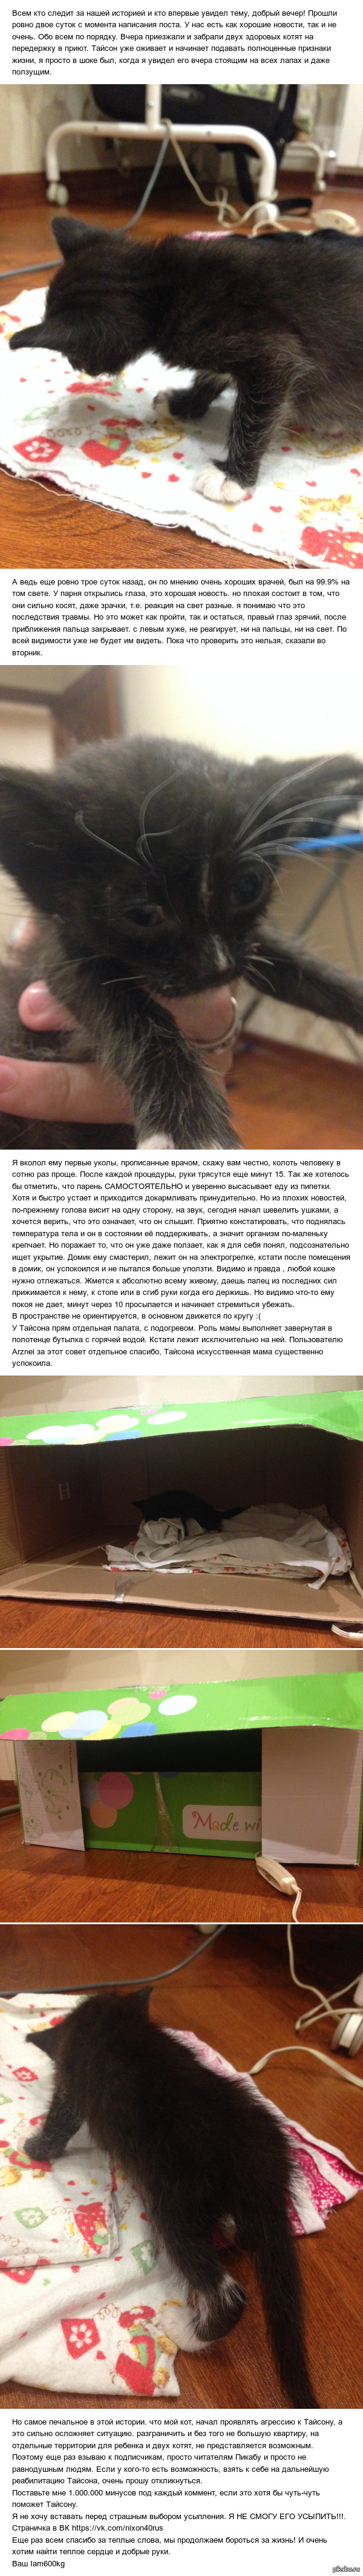 Little story, little fighter (Part 2) - cat, Charity, The ark, Obninsk, Balabanovo, Tyson, Longpost